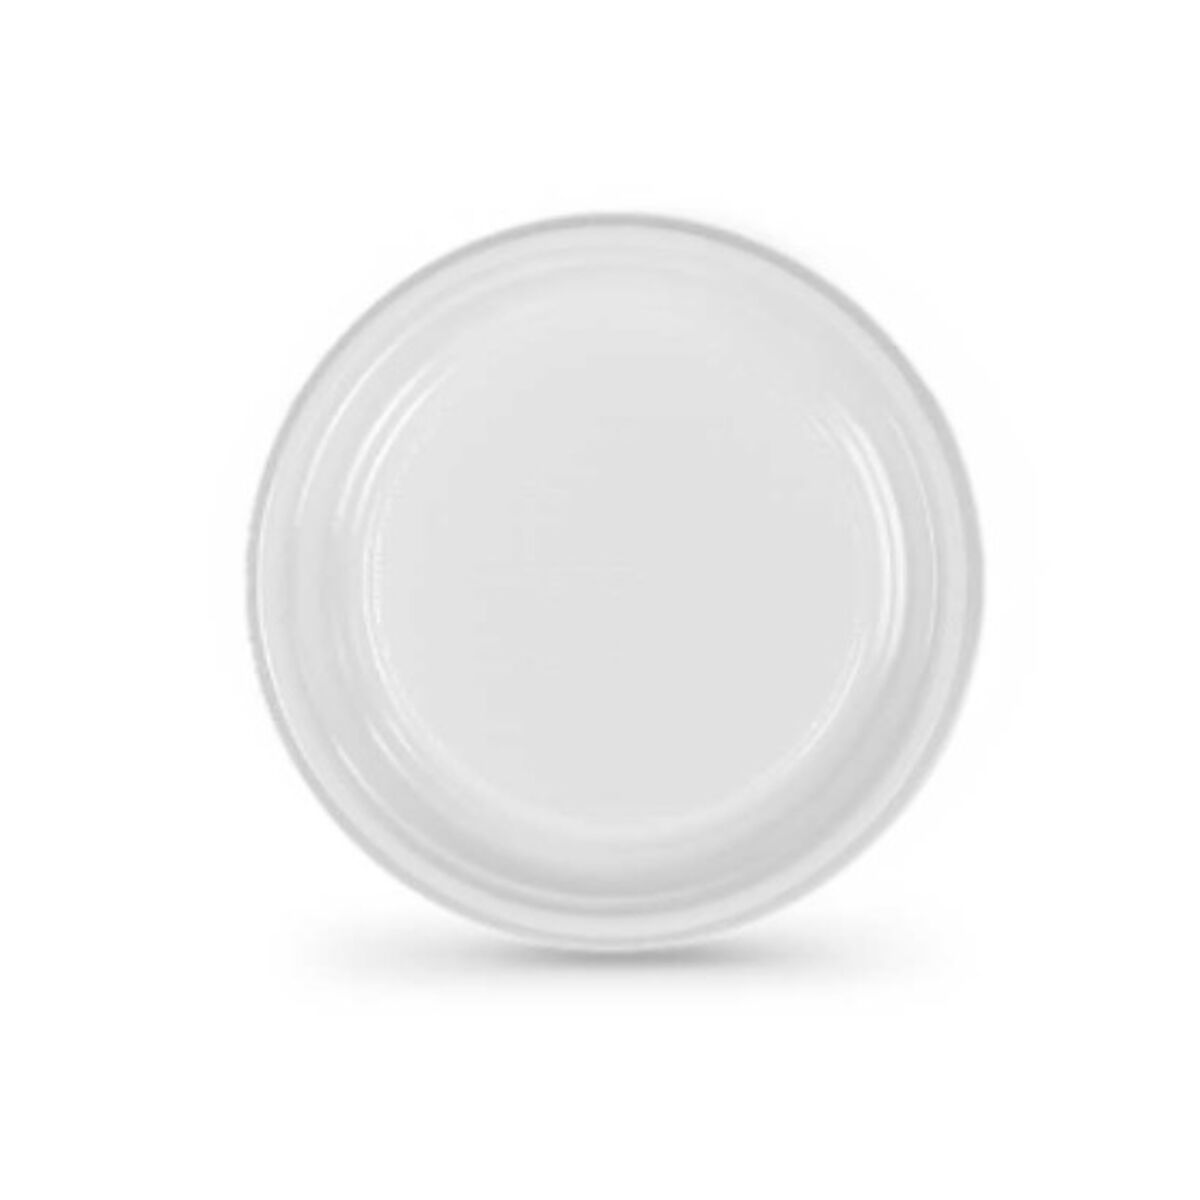 Mehrweg-Teller-Set Algon Weiß 17 cm 12 Stück